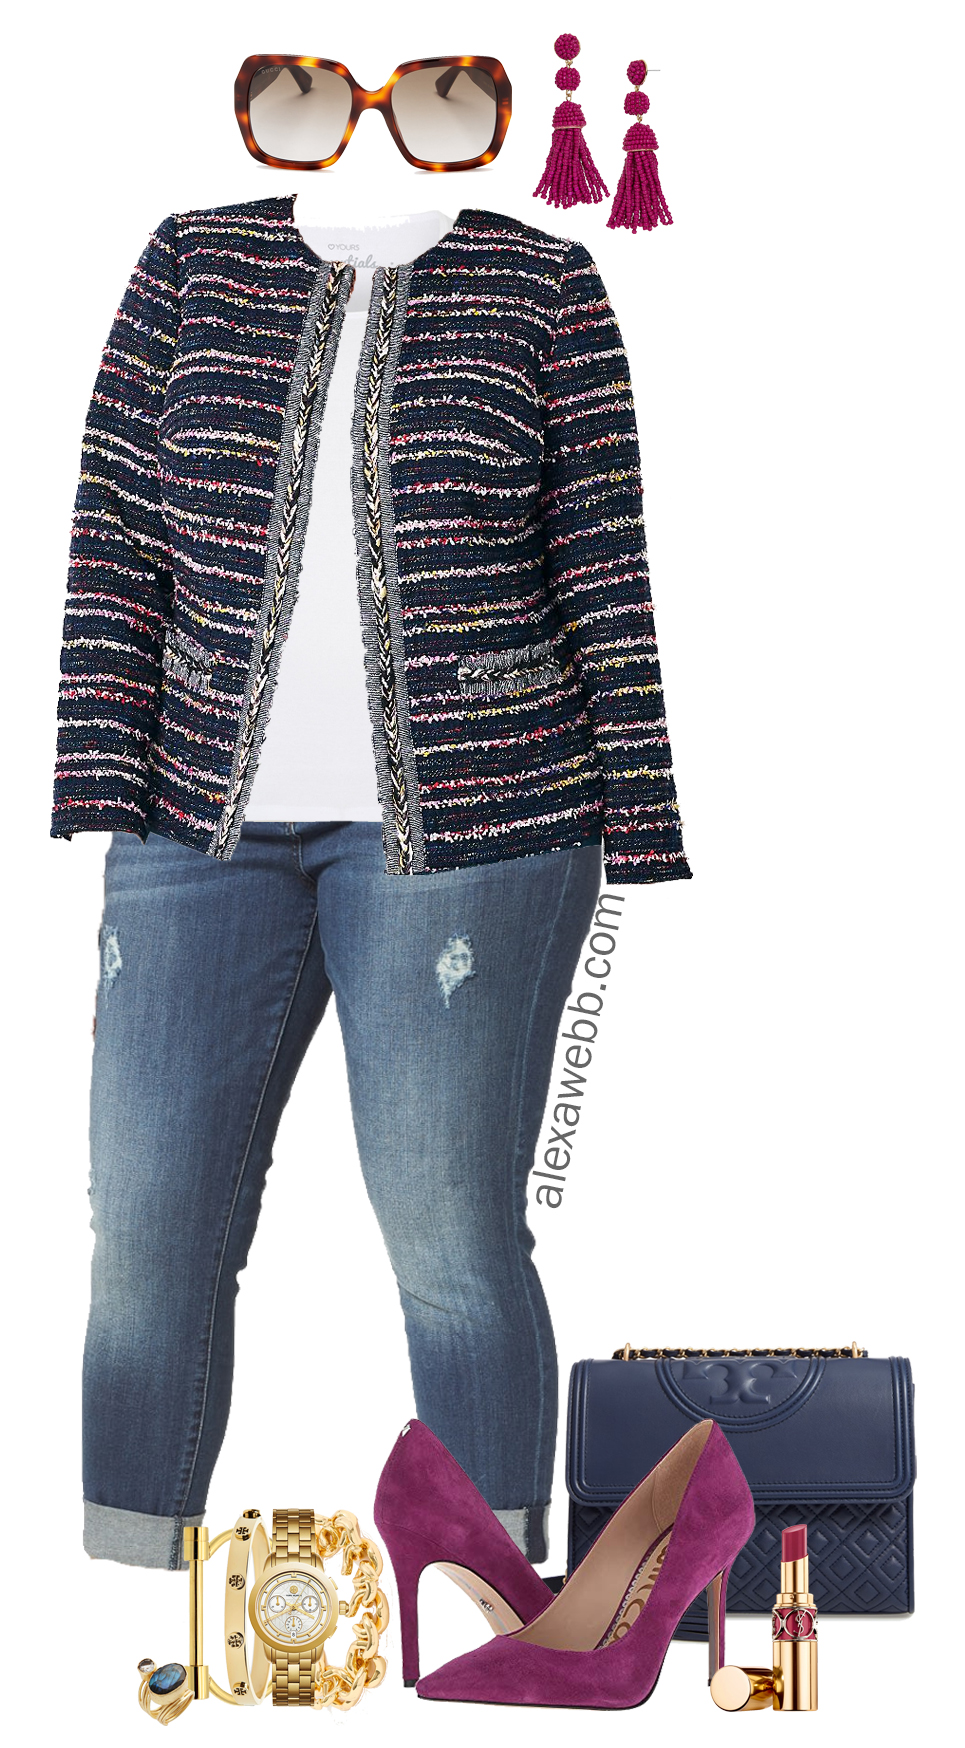 Plus Size Tweed Jacket Outfit - Alexa Webb